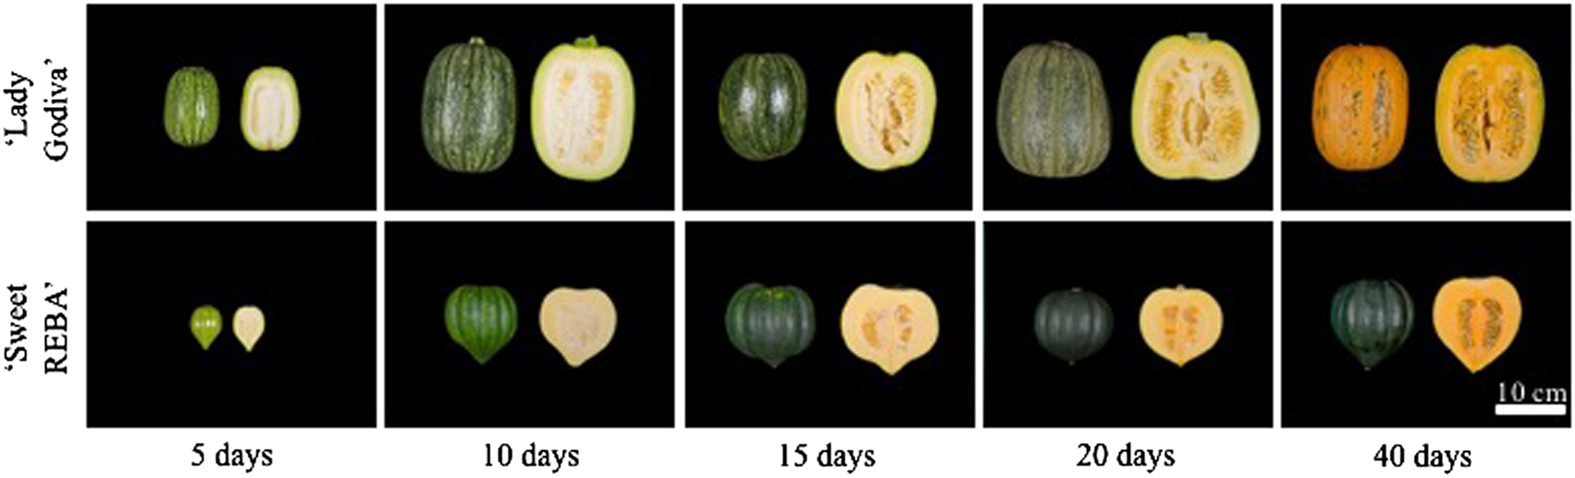 Comparative Analysis Of Cucurbita Pepo Metabolism Throughout Fruit